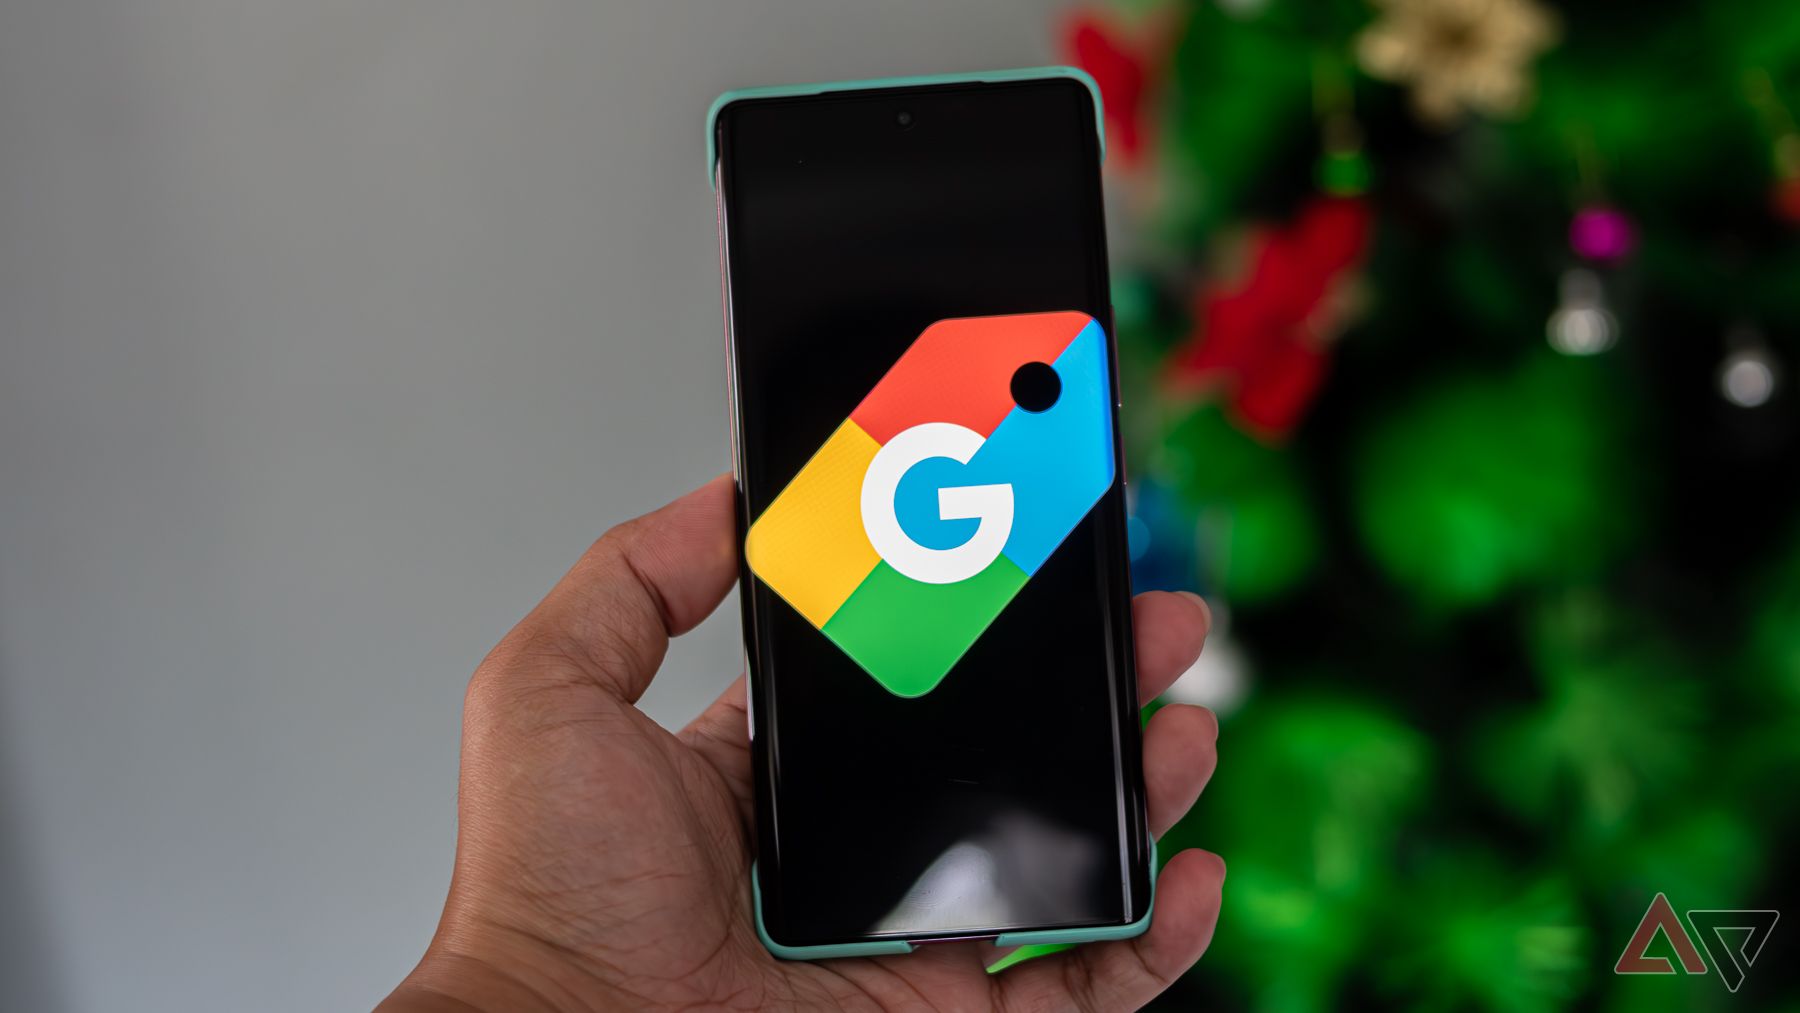 google shopping logo on a phone screen